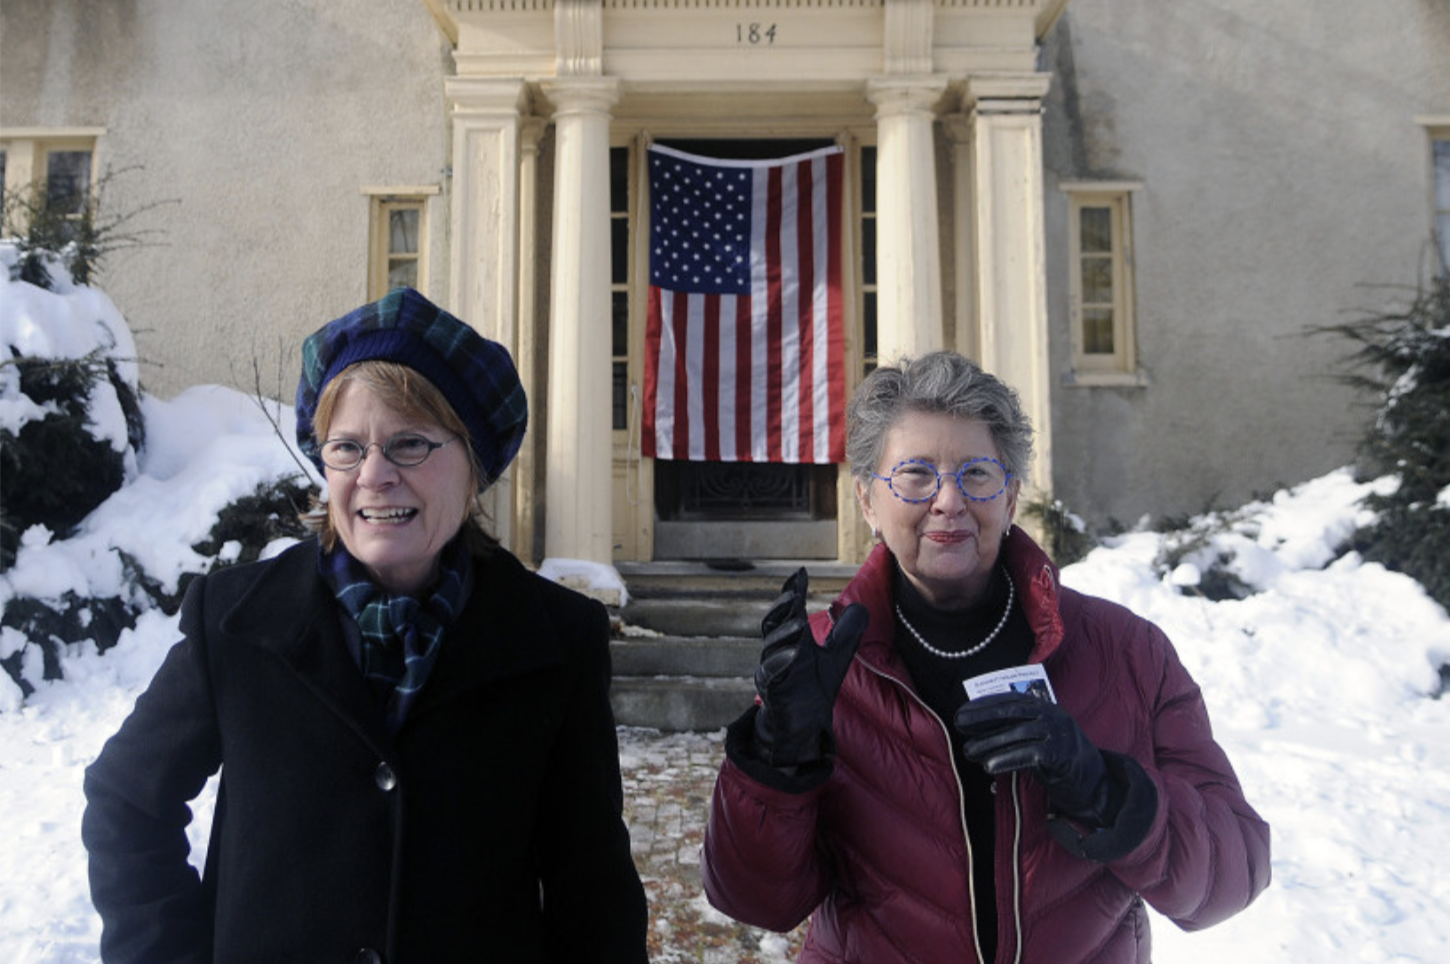 Gannett Family dedicating museum to First Amendment